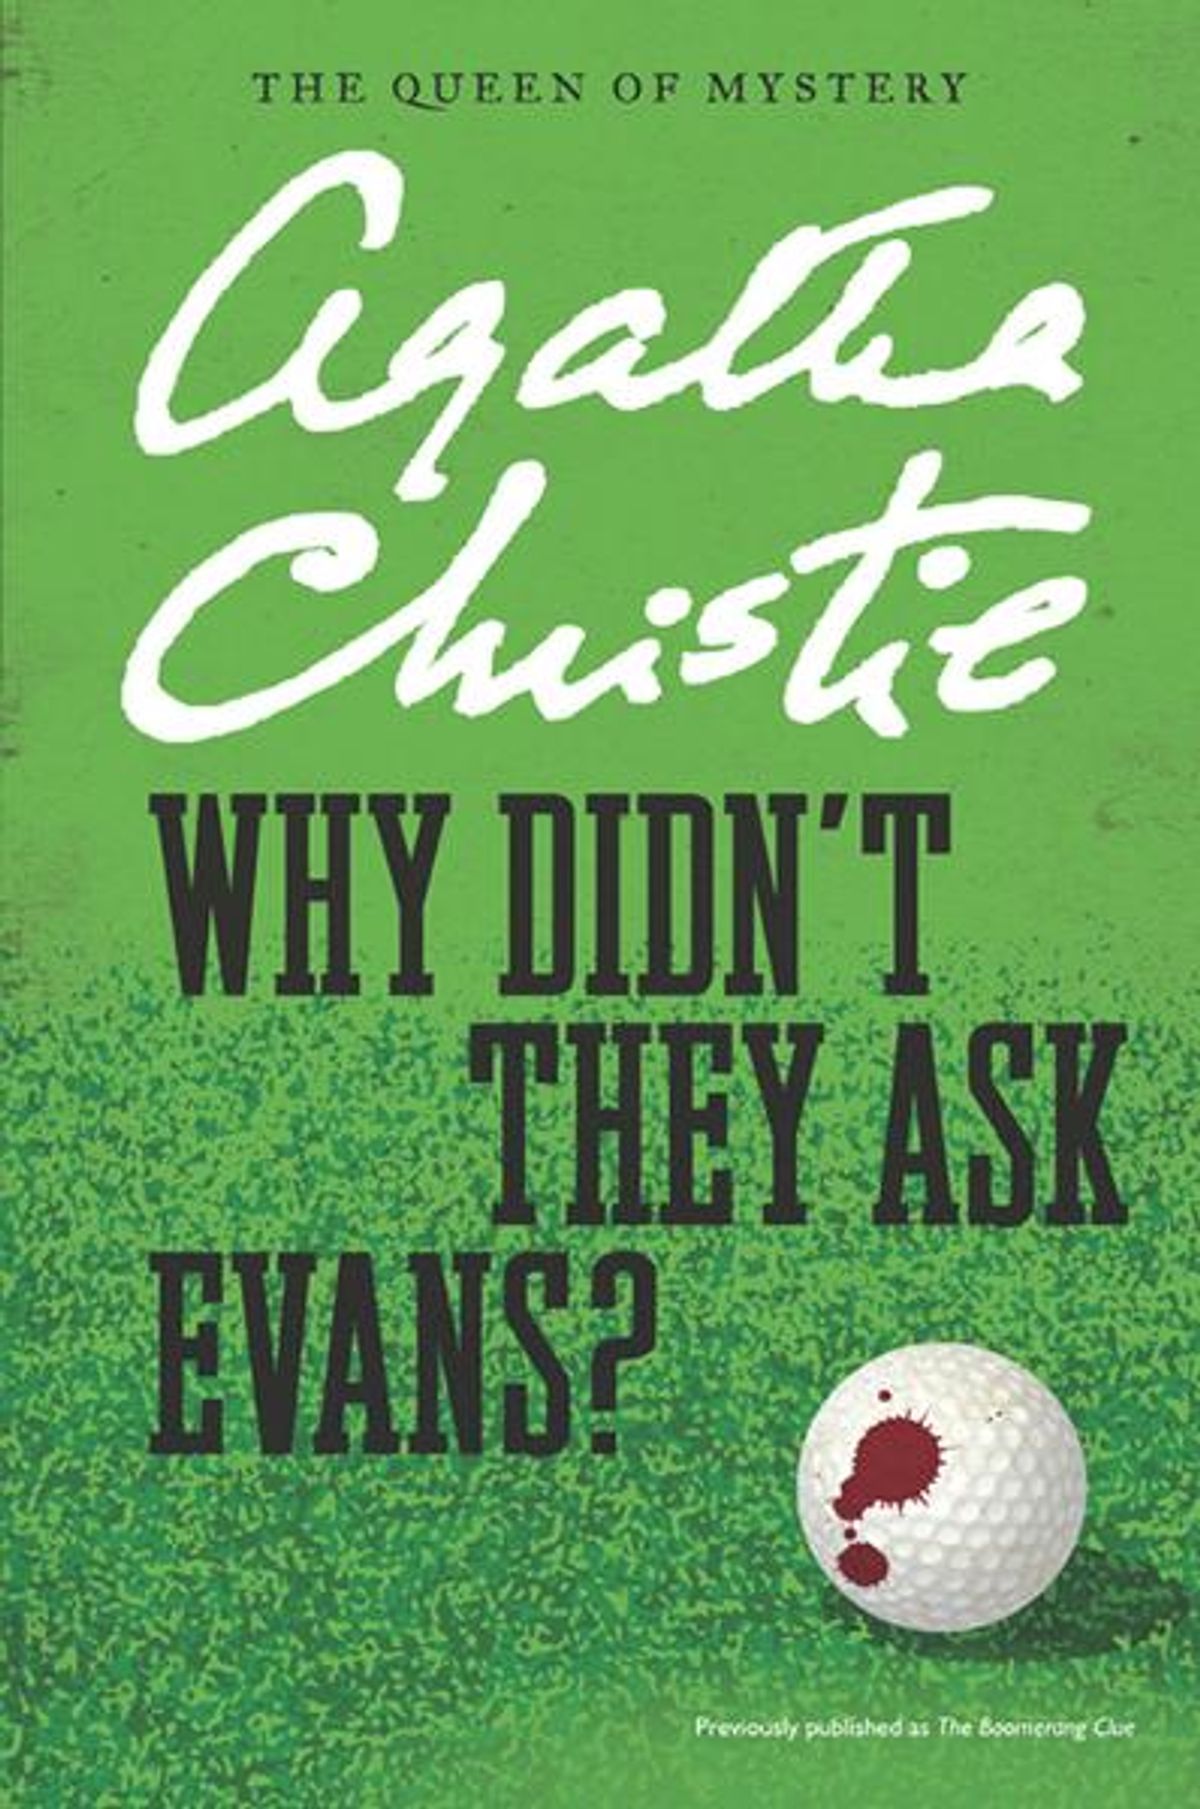 Agatha Christie livros 34